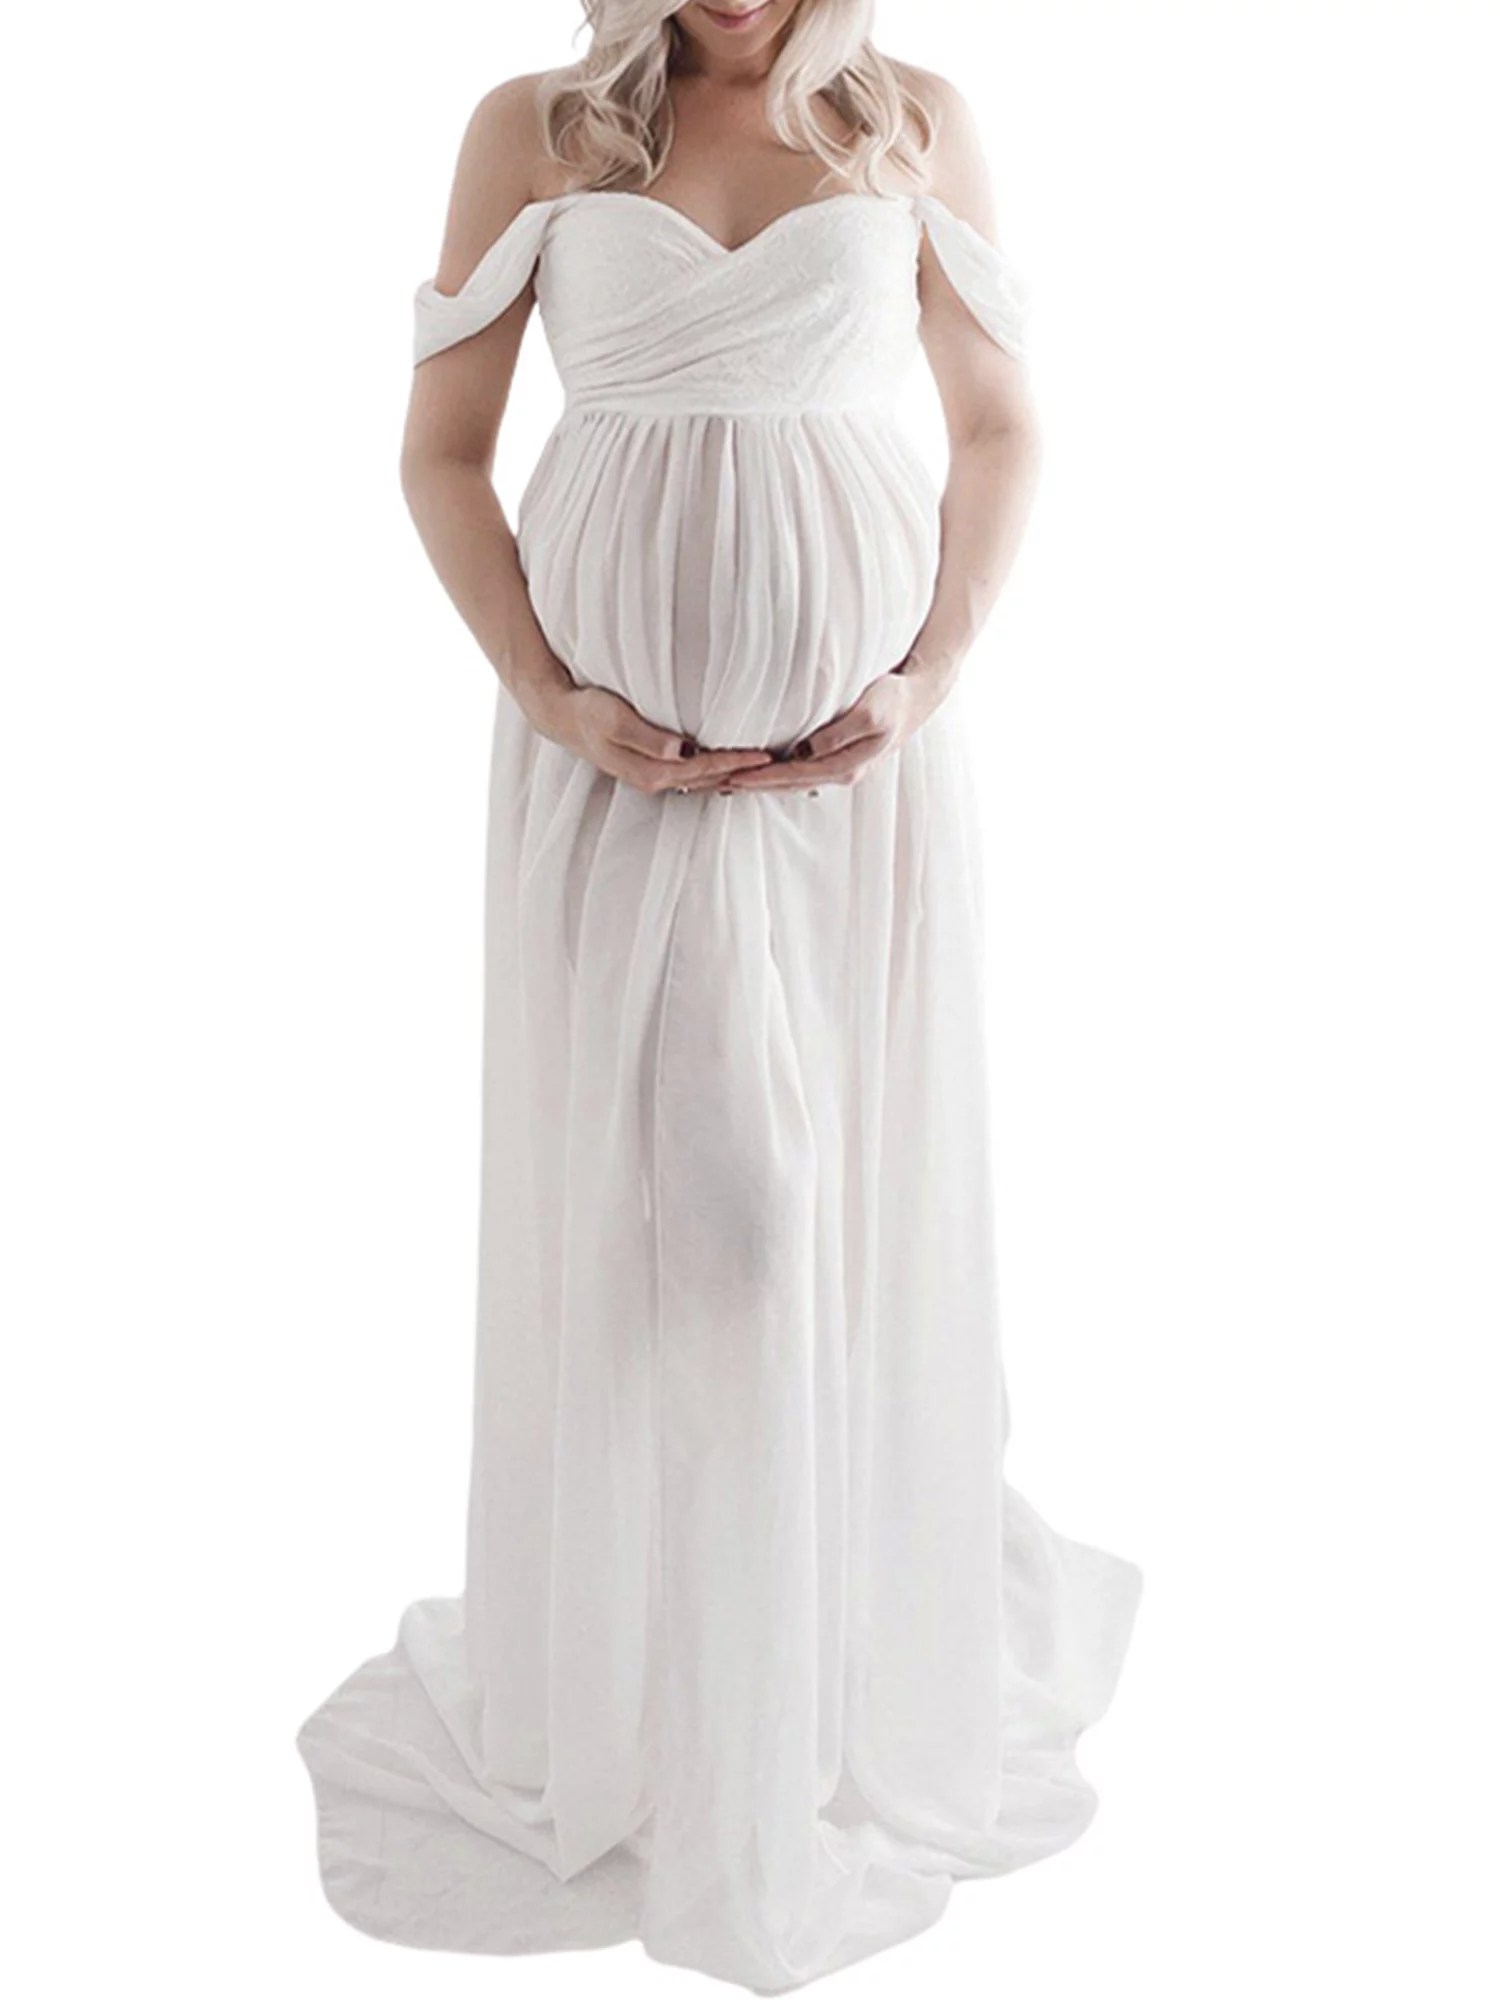 ANPHON Maternity Dress, best maternity photoshoot dresses